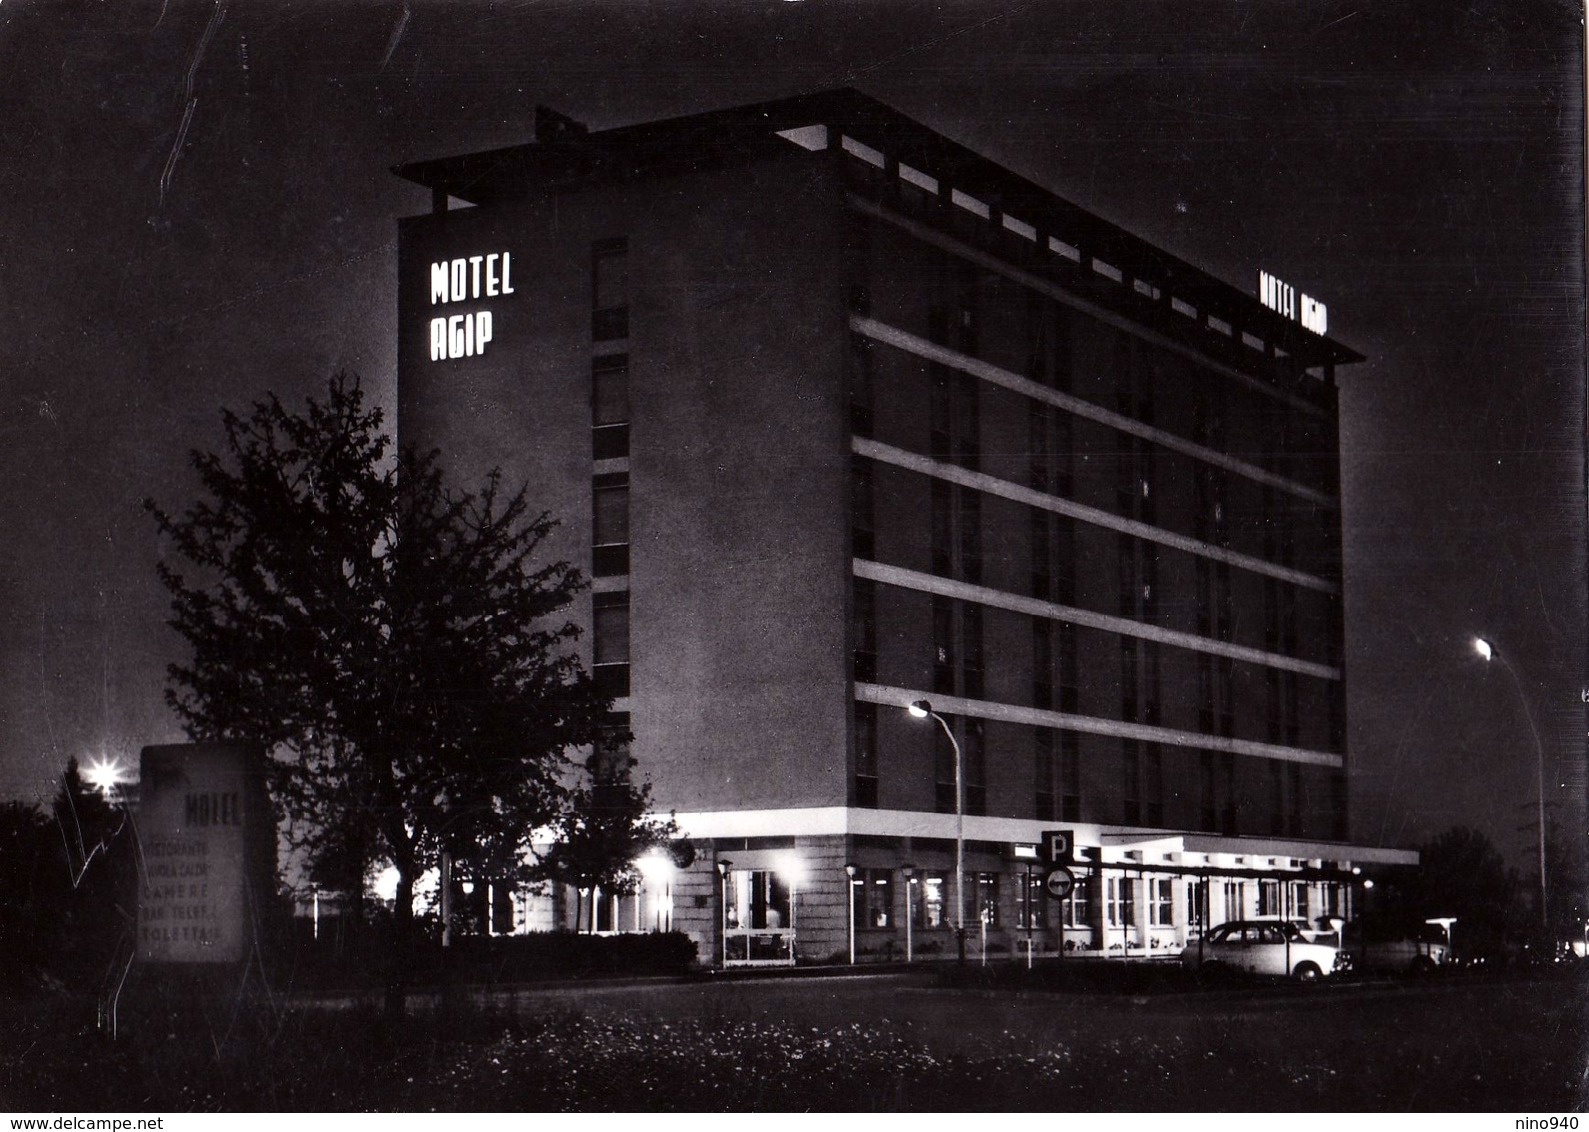 TORINO - Motel AGIP - Notturno - F/G - V: 1968 - Cafes, Hotels & Restaurants